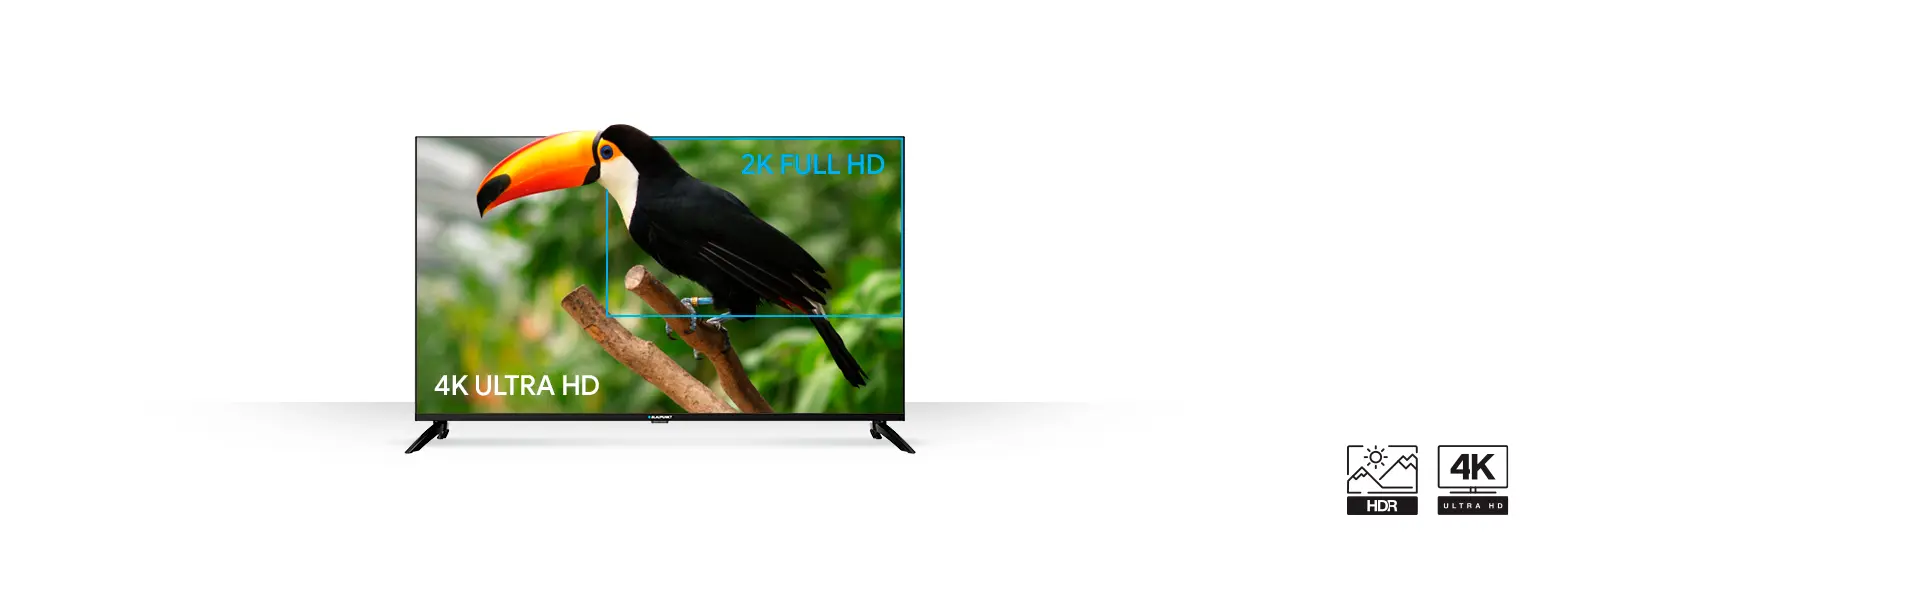 UHD 4K Android TV Blaupunkt 43UBC6000